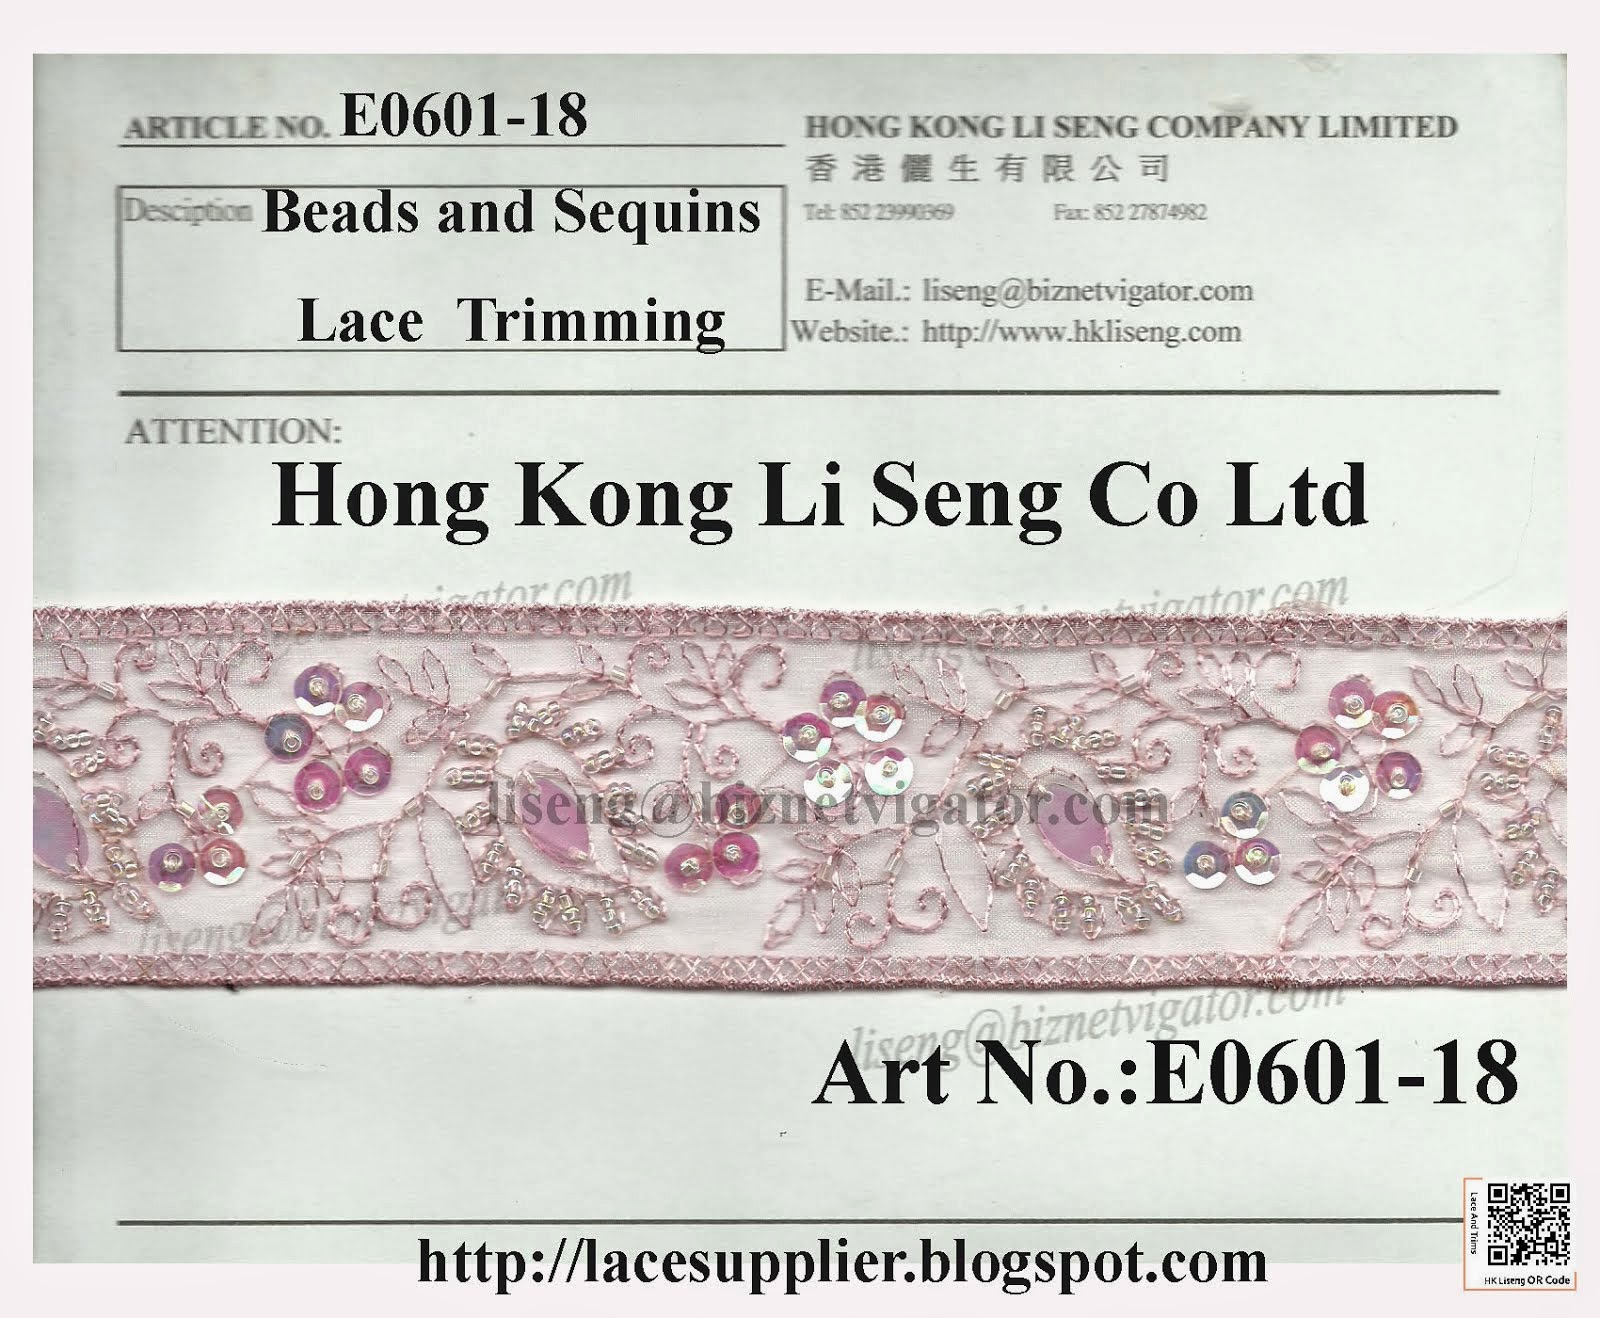 Beads and Sequins Lace Trimming Manufacturer - Hong Kong Li Seng Co Ltd